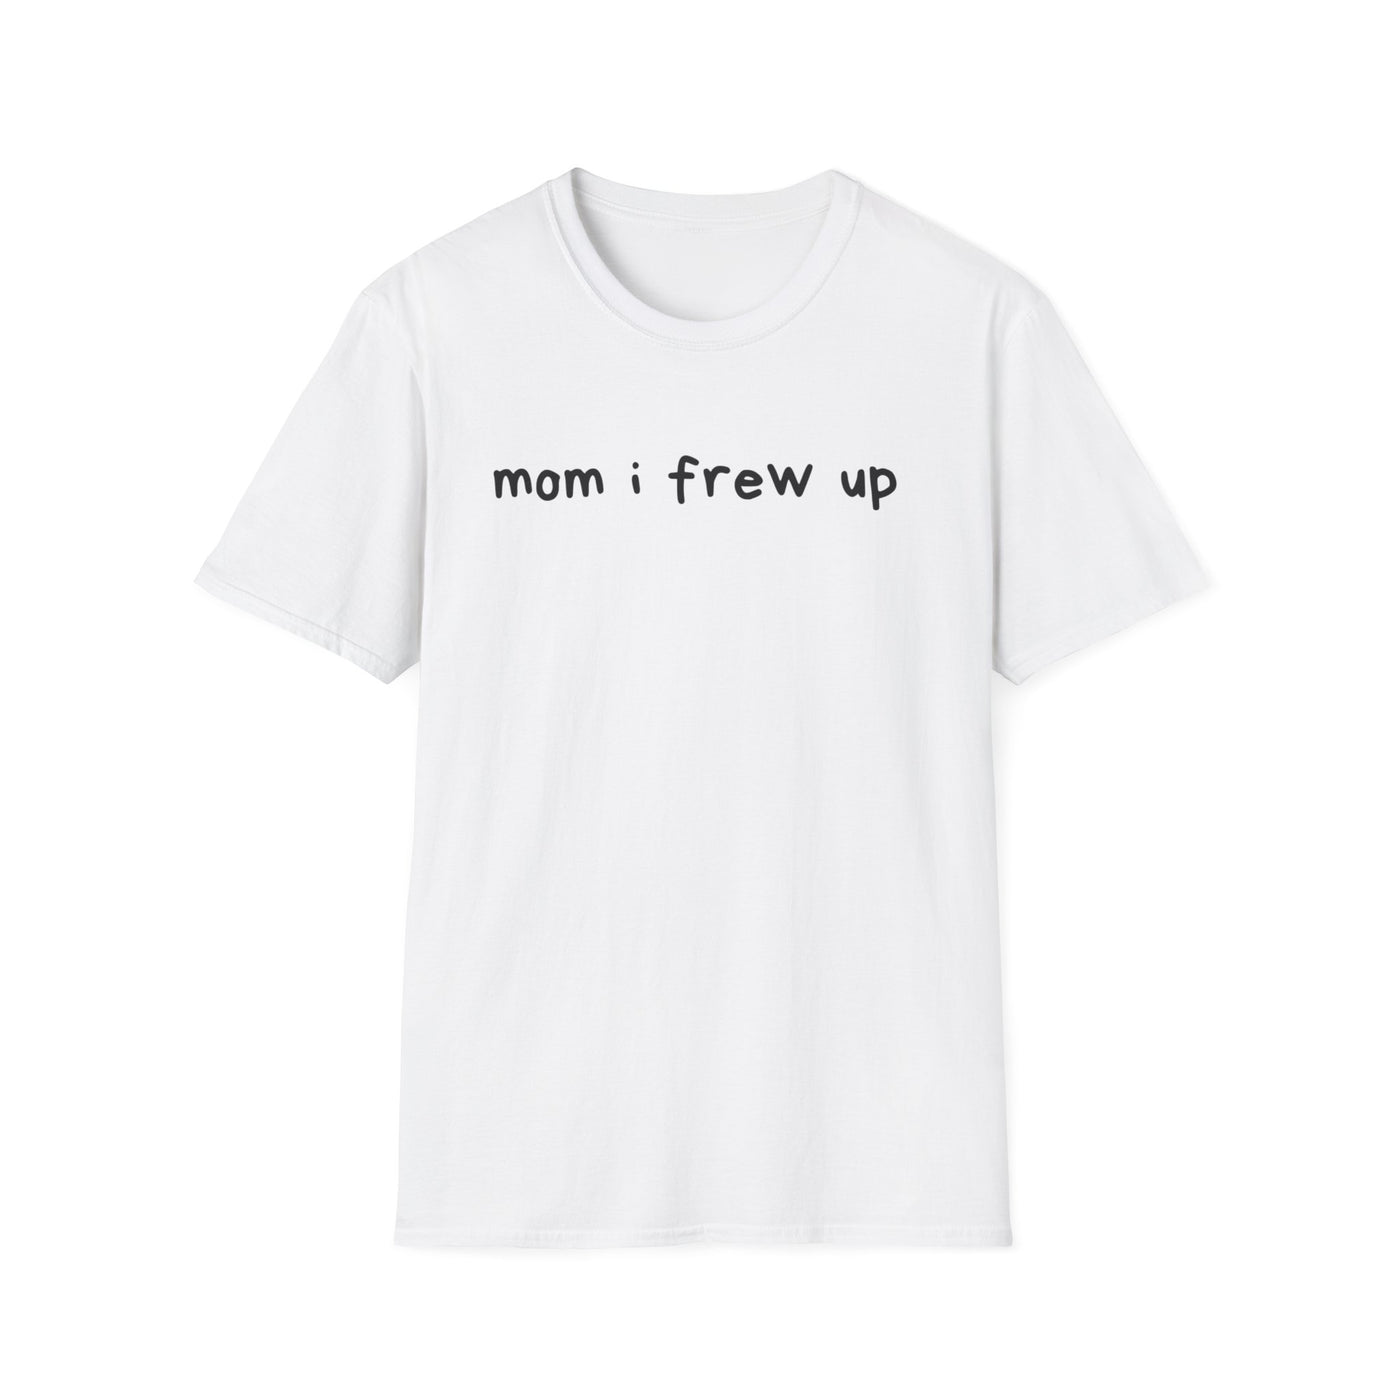 Mom I Frew Up